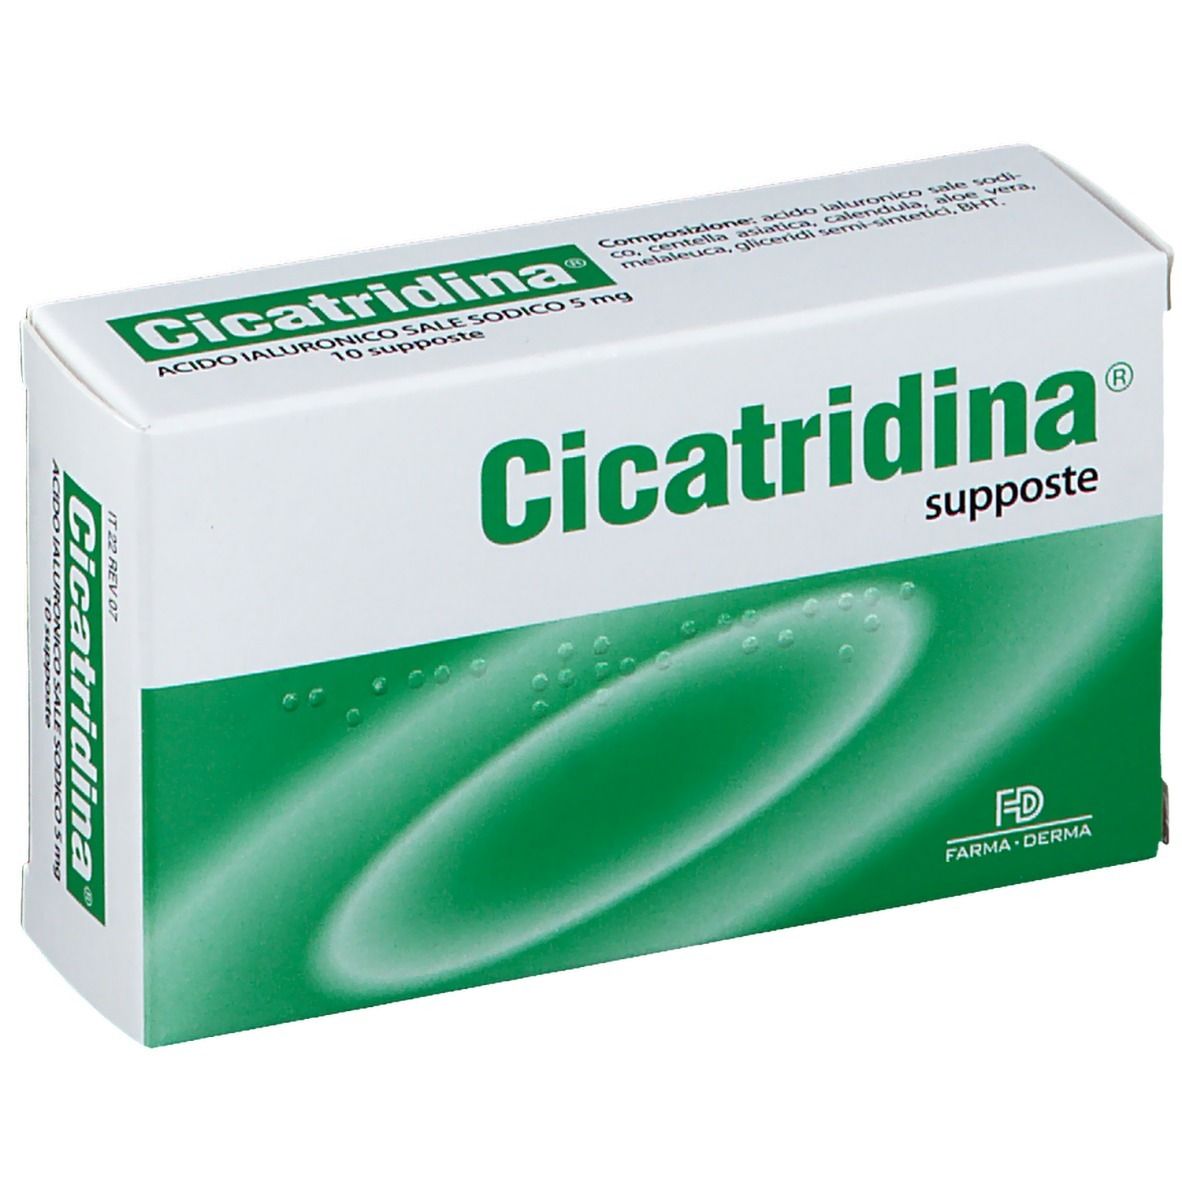 Image of Cicatridina® Supposte